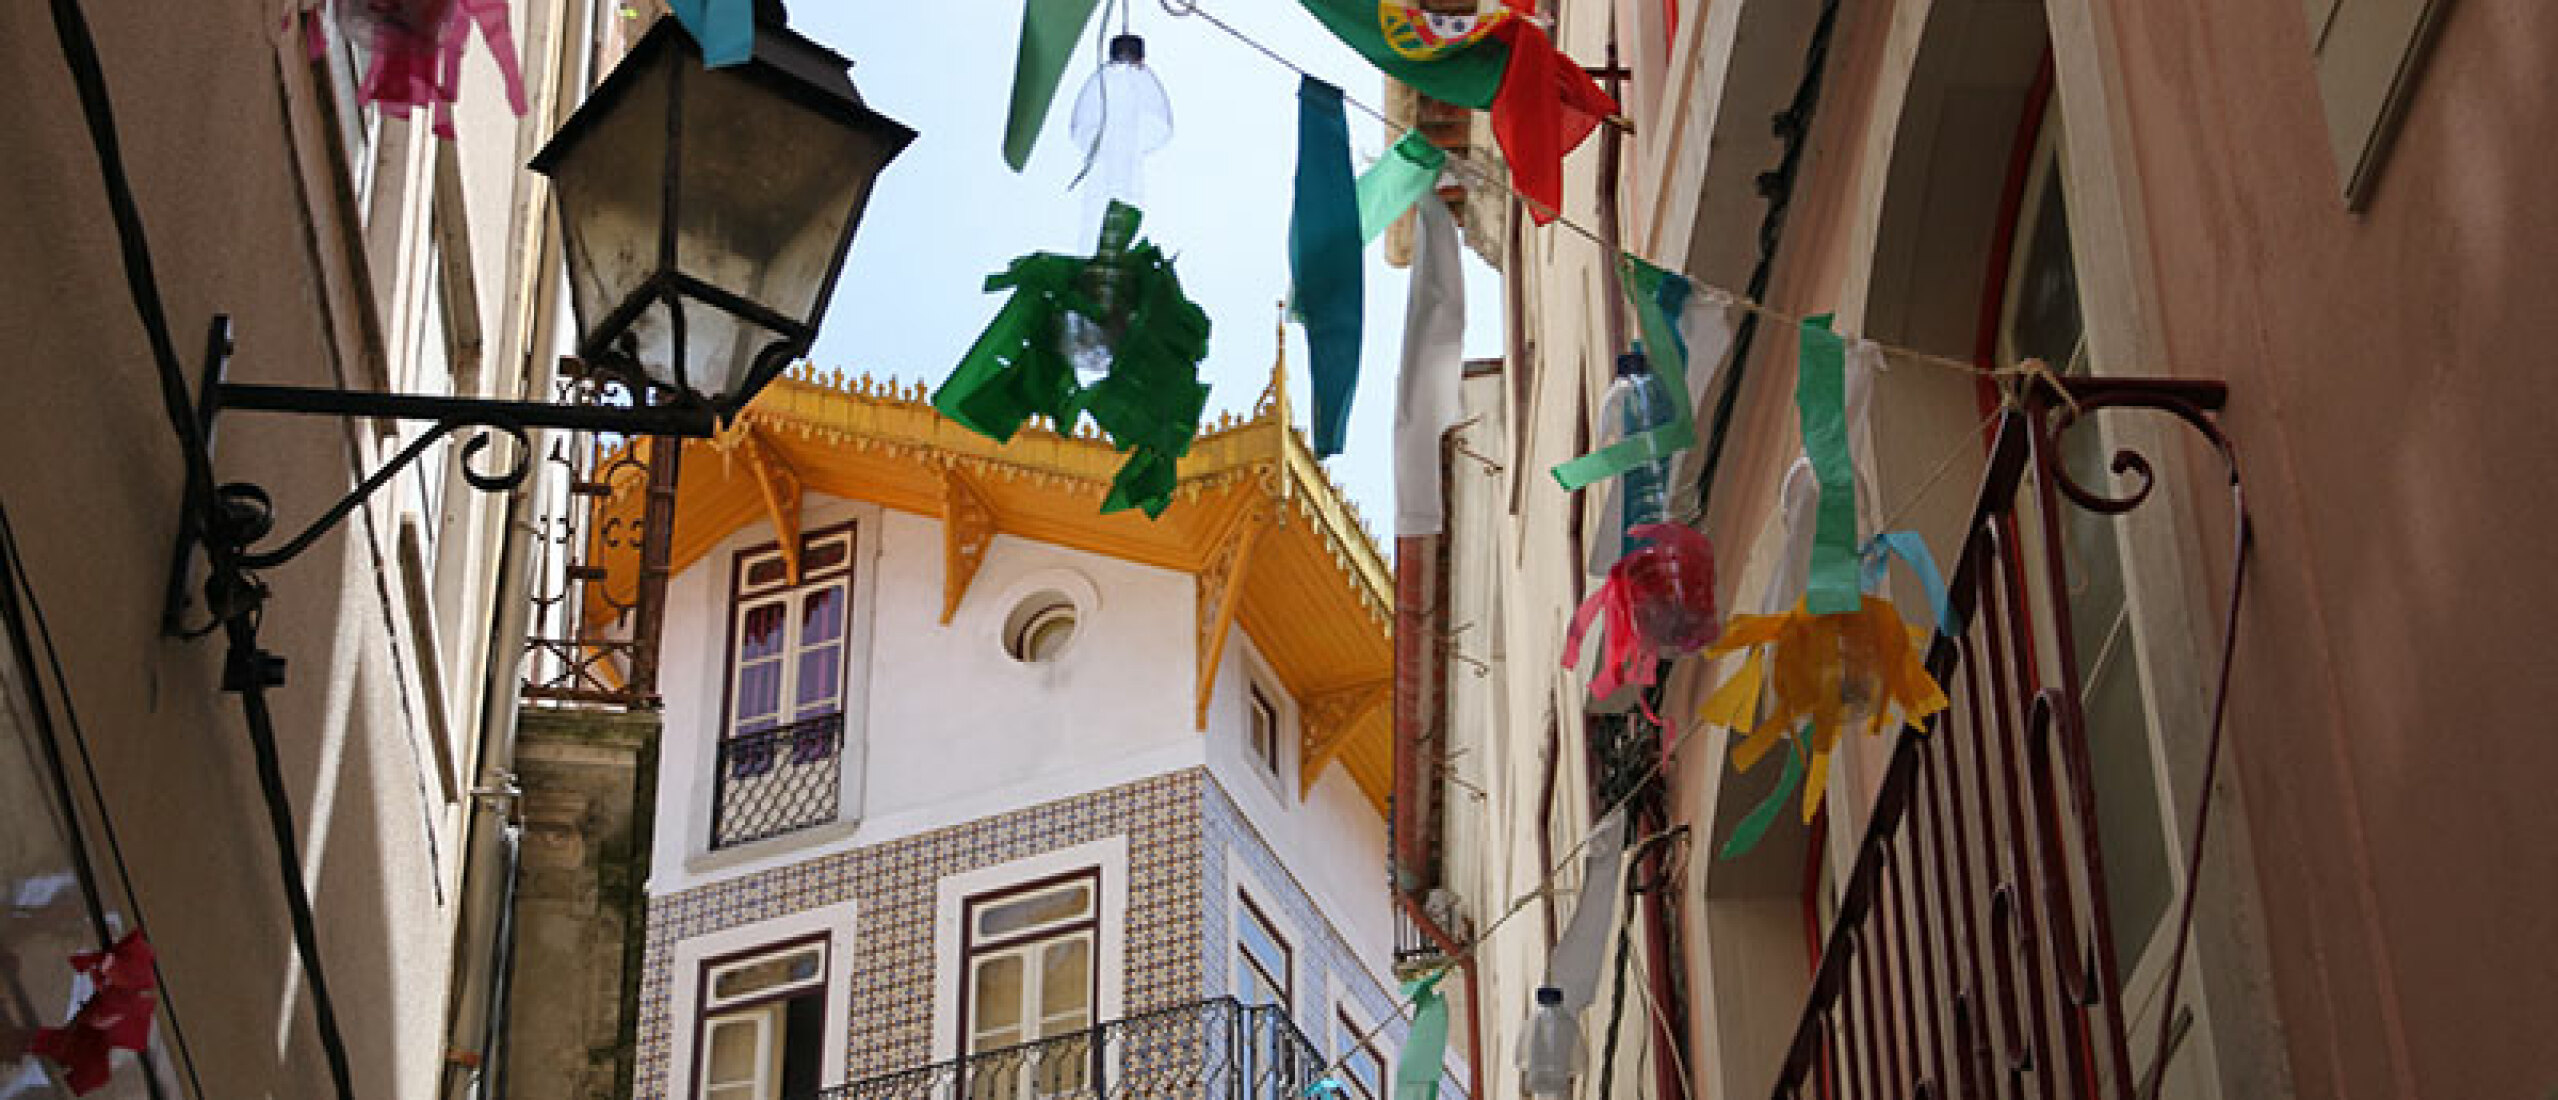 Coimbra, één middagje sightseeing écht te kort